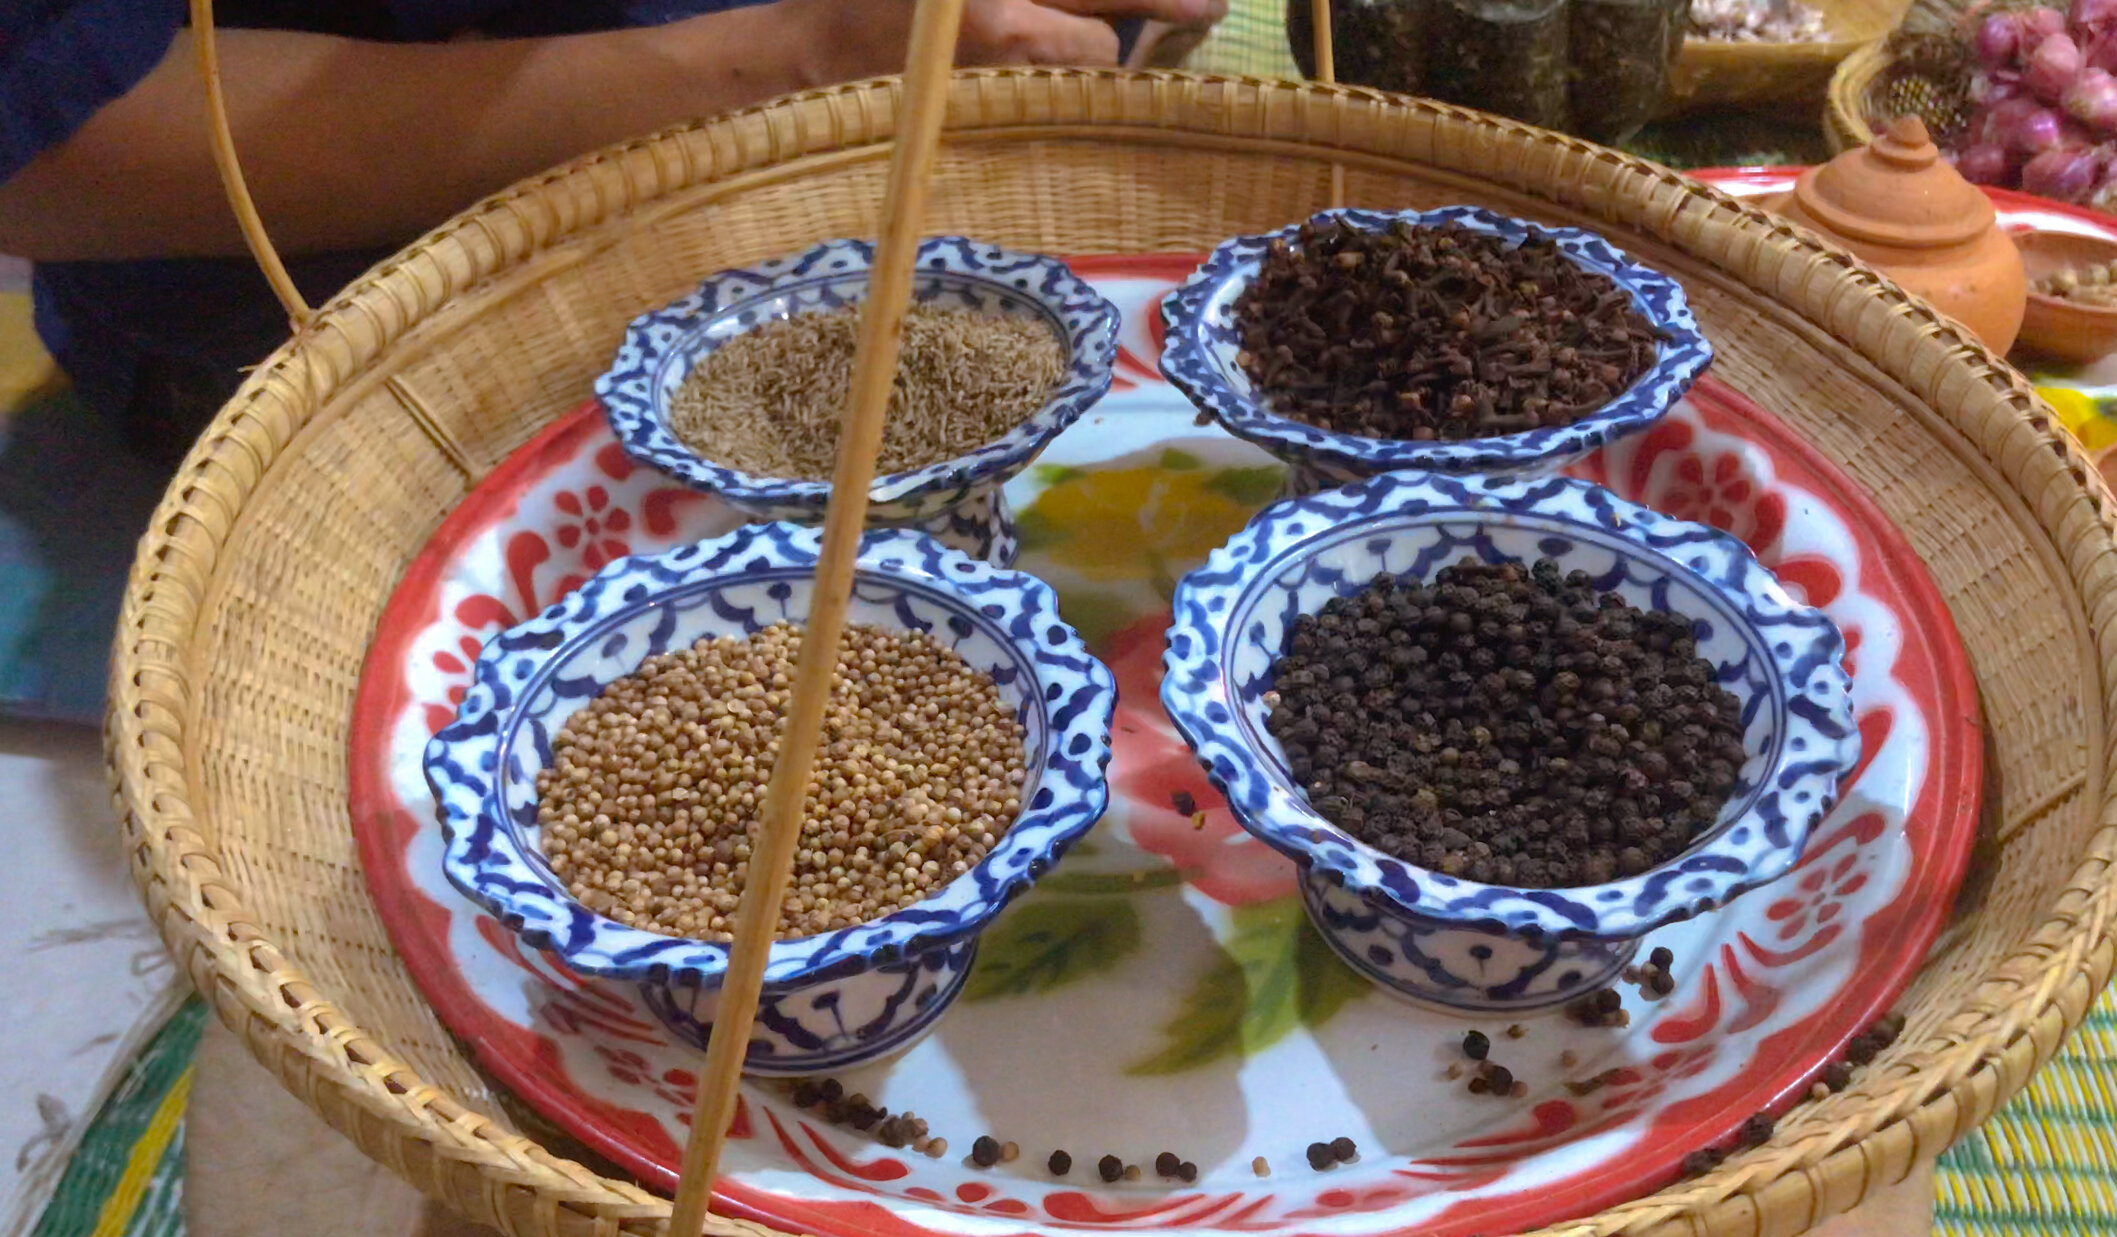 spices; coriander, star anise, cardamom and cumin